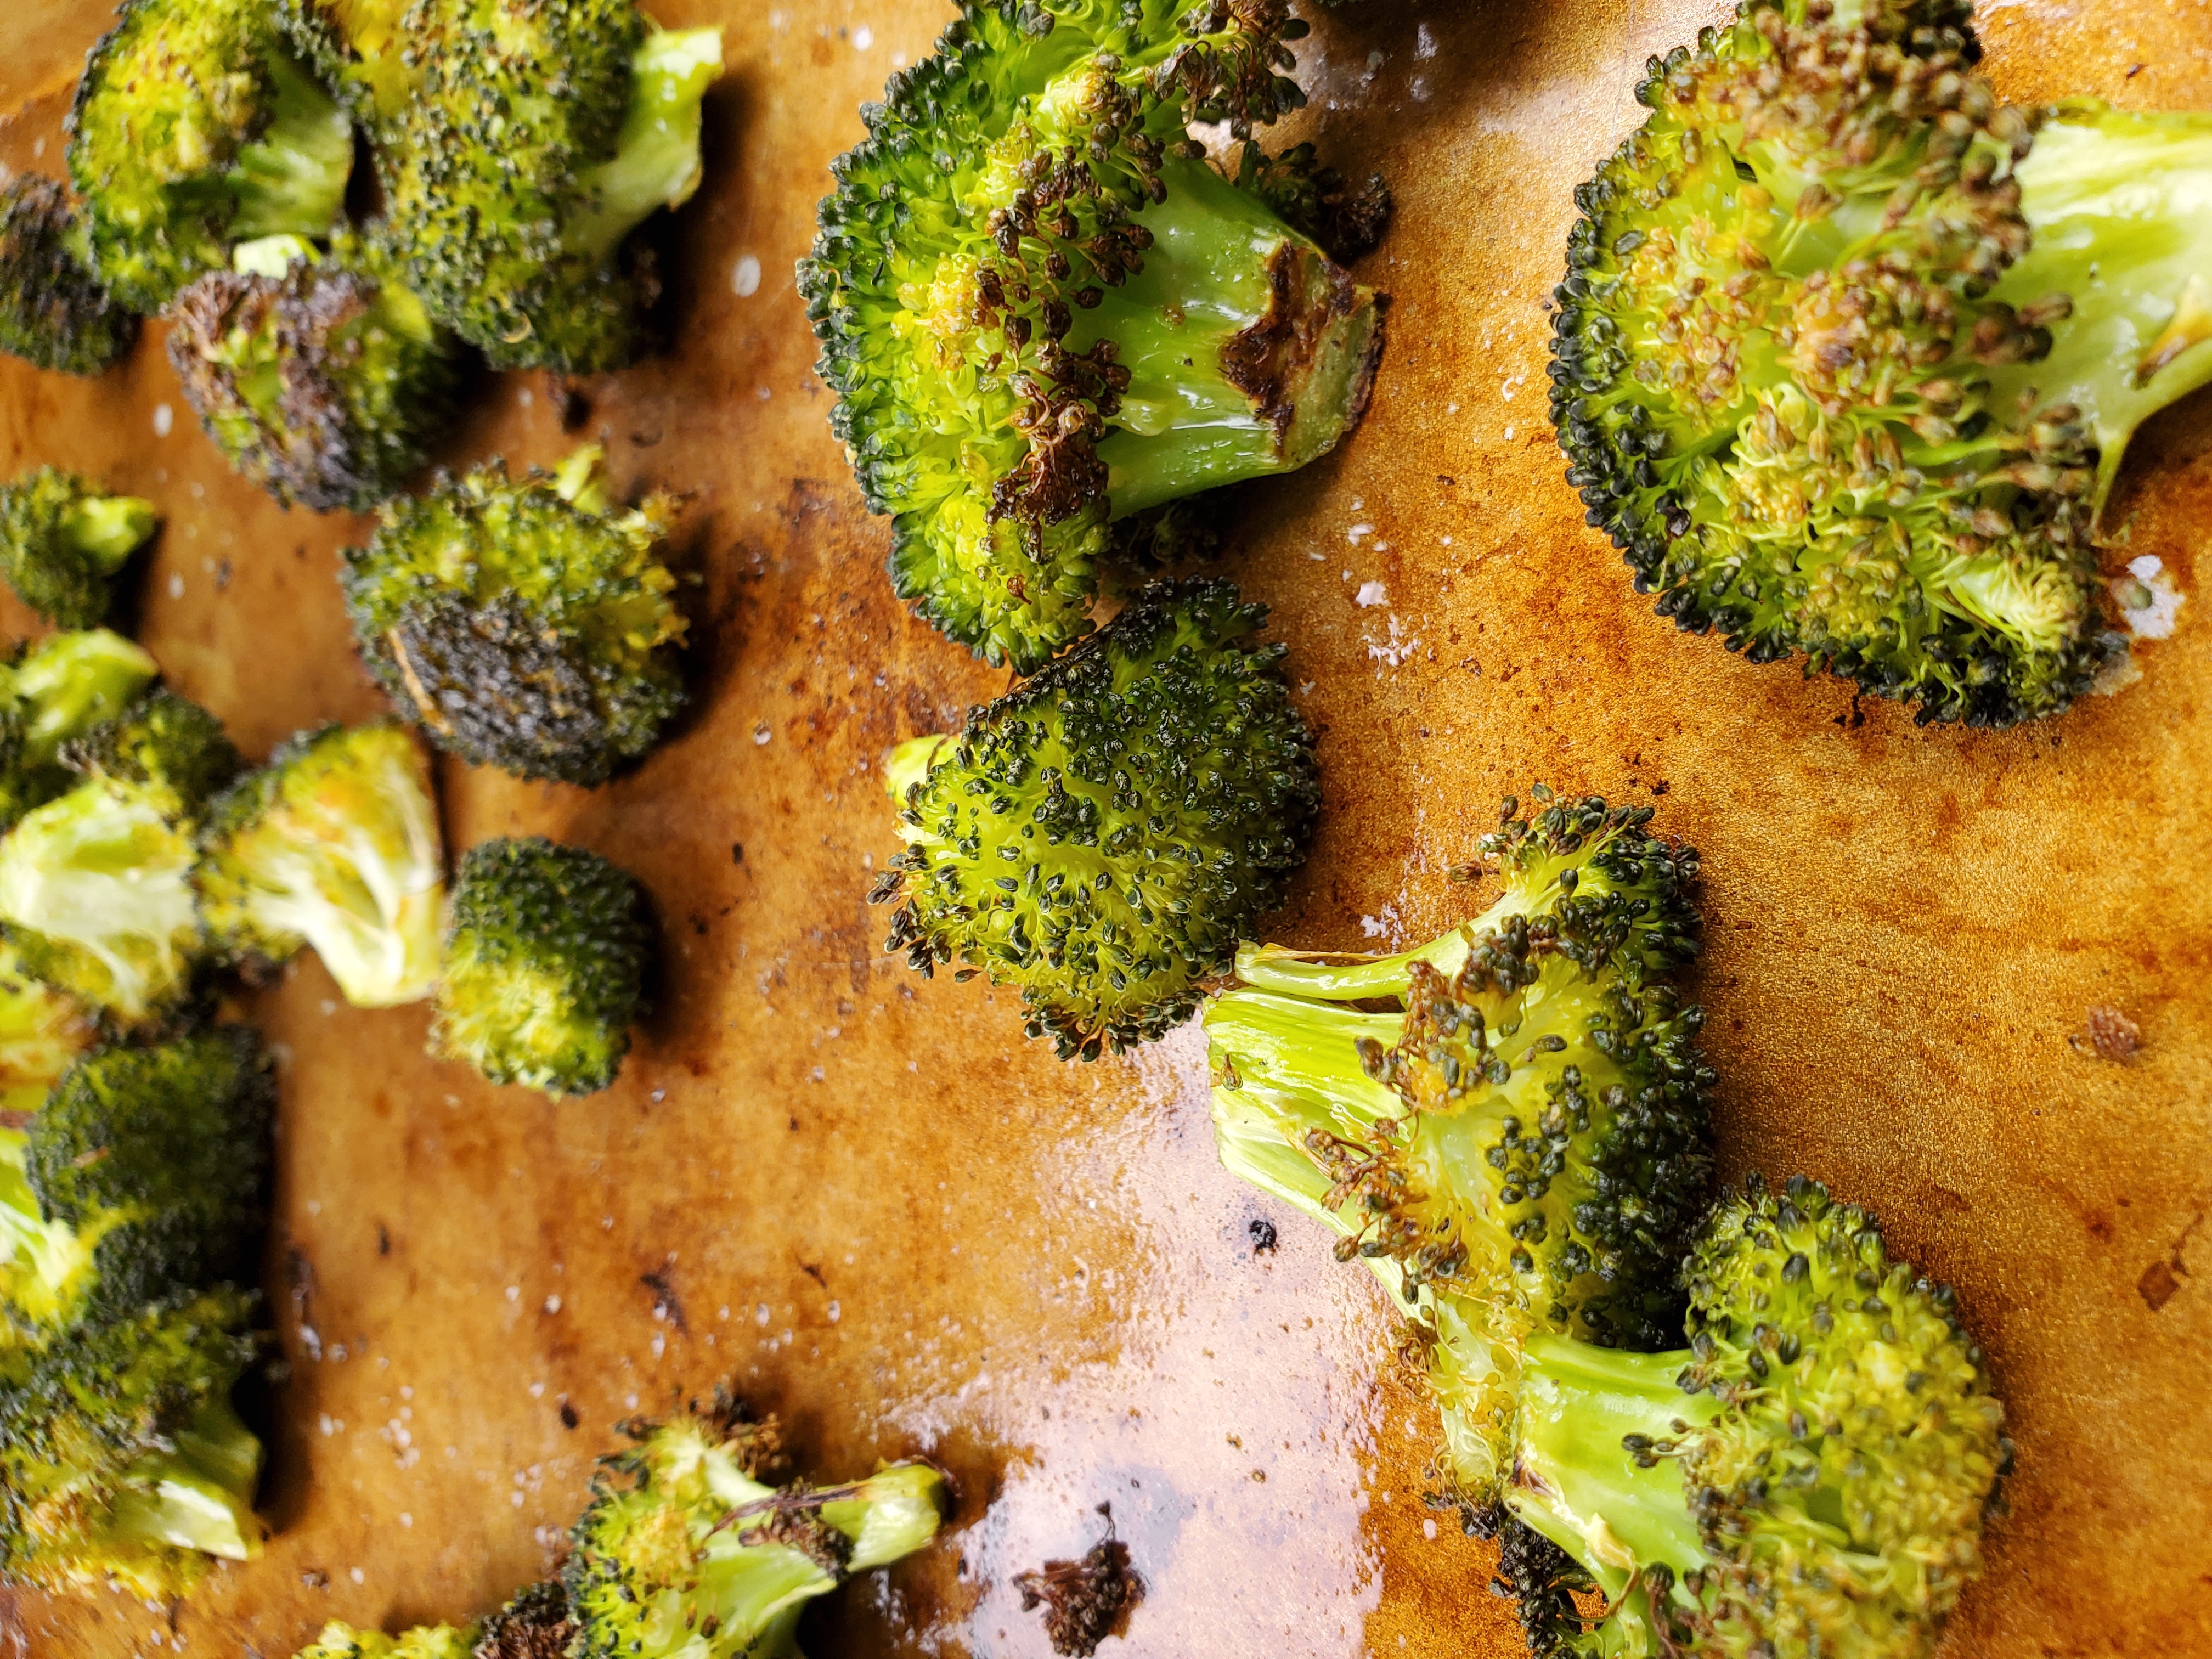 Sheet pan of roasted broccoli